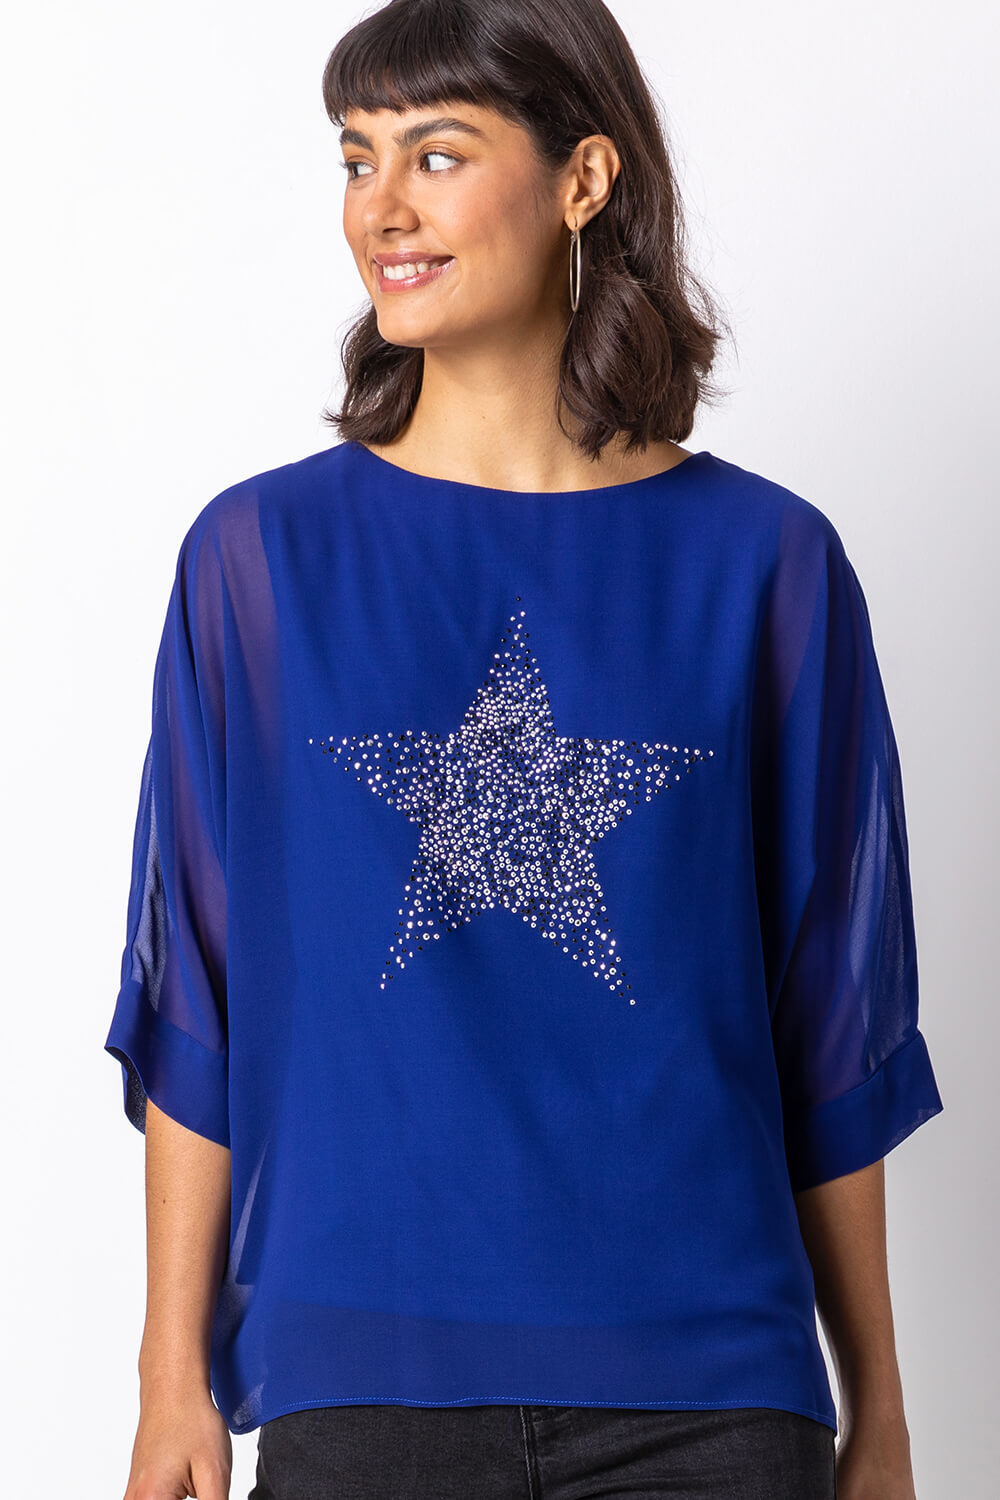 Royal Blue Star Embellished Chiffon Top, Image 3 of 4